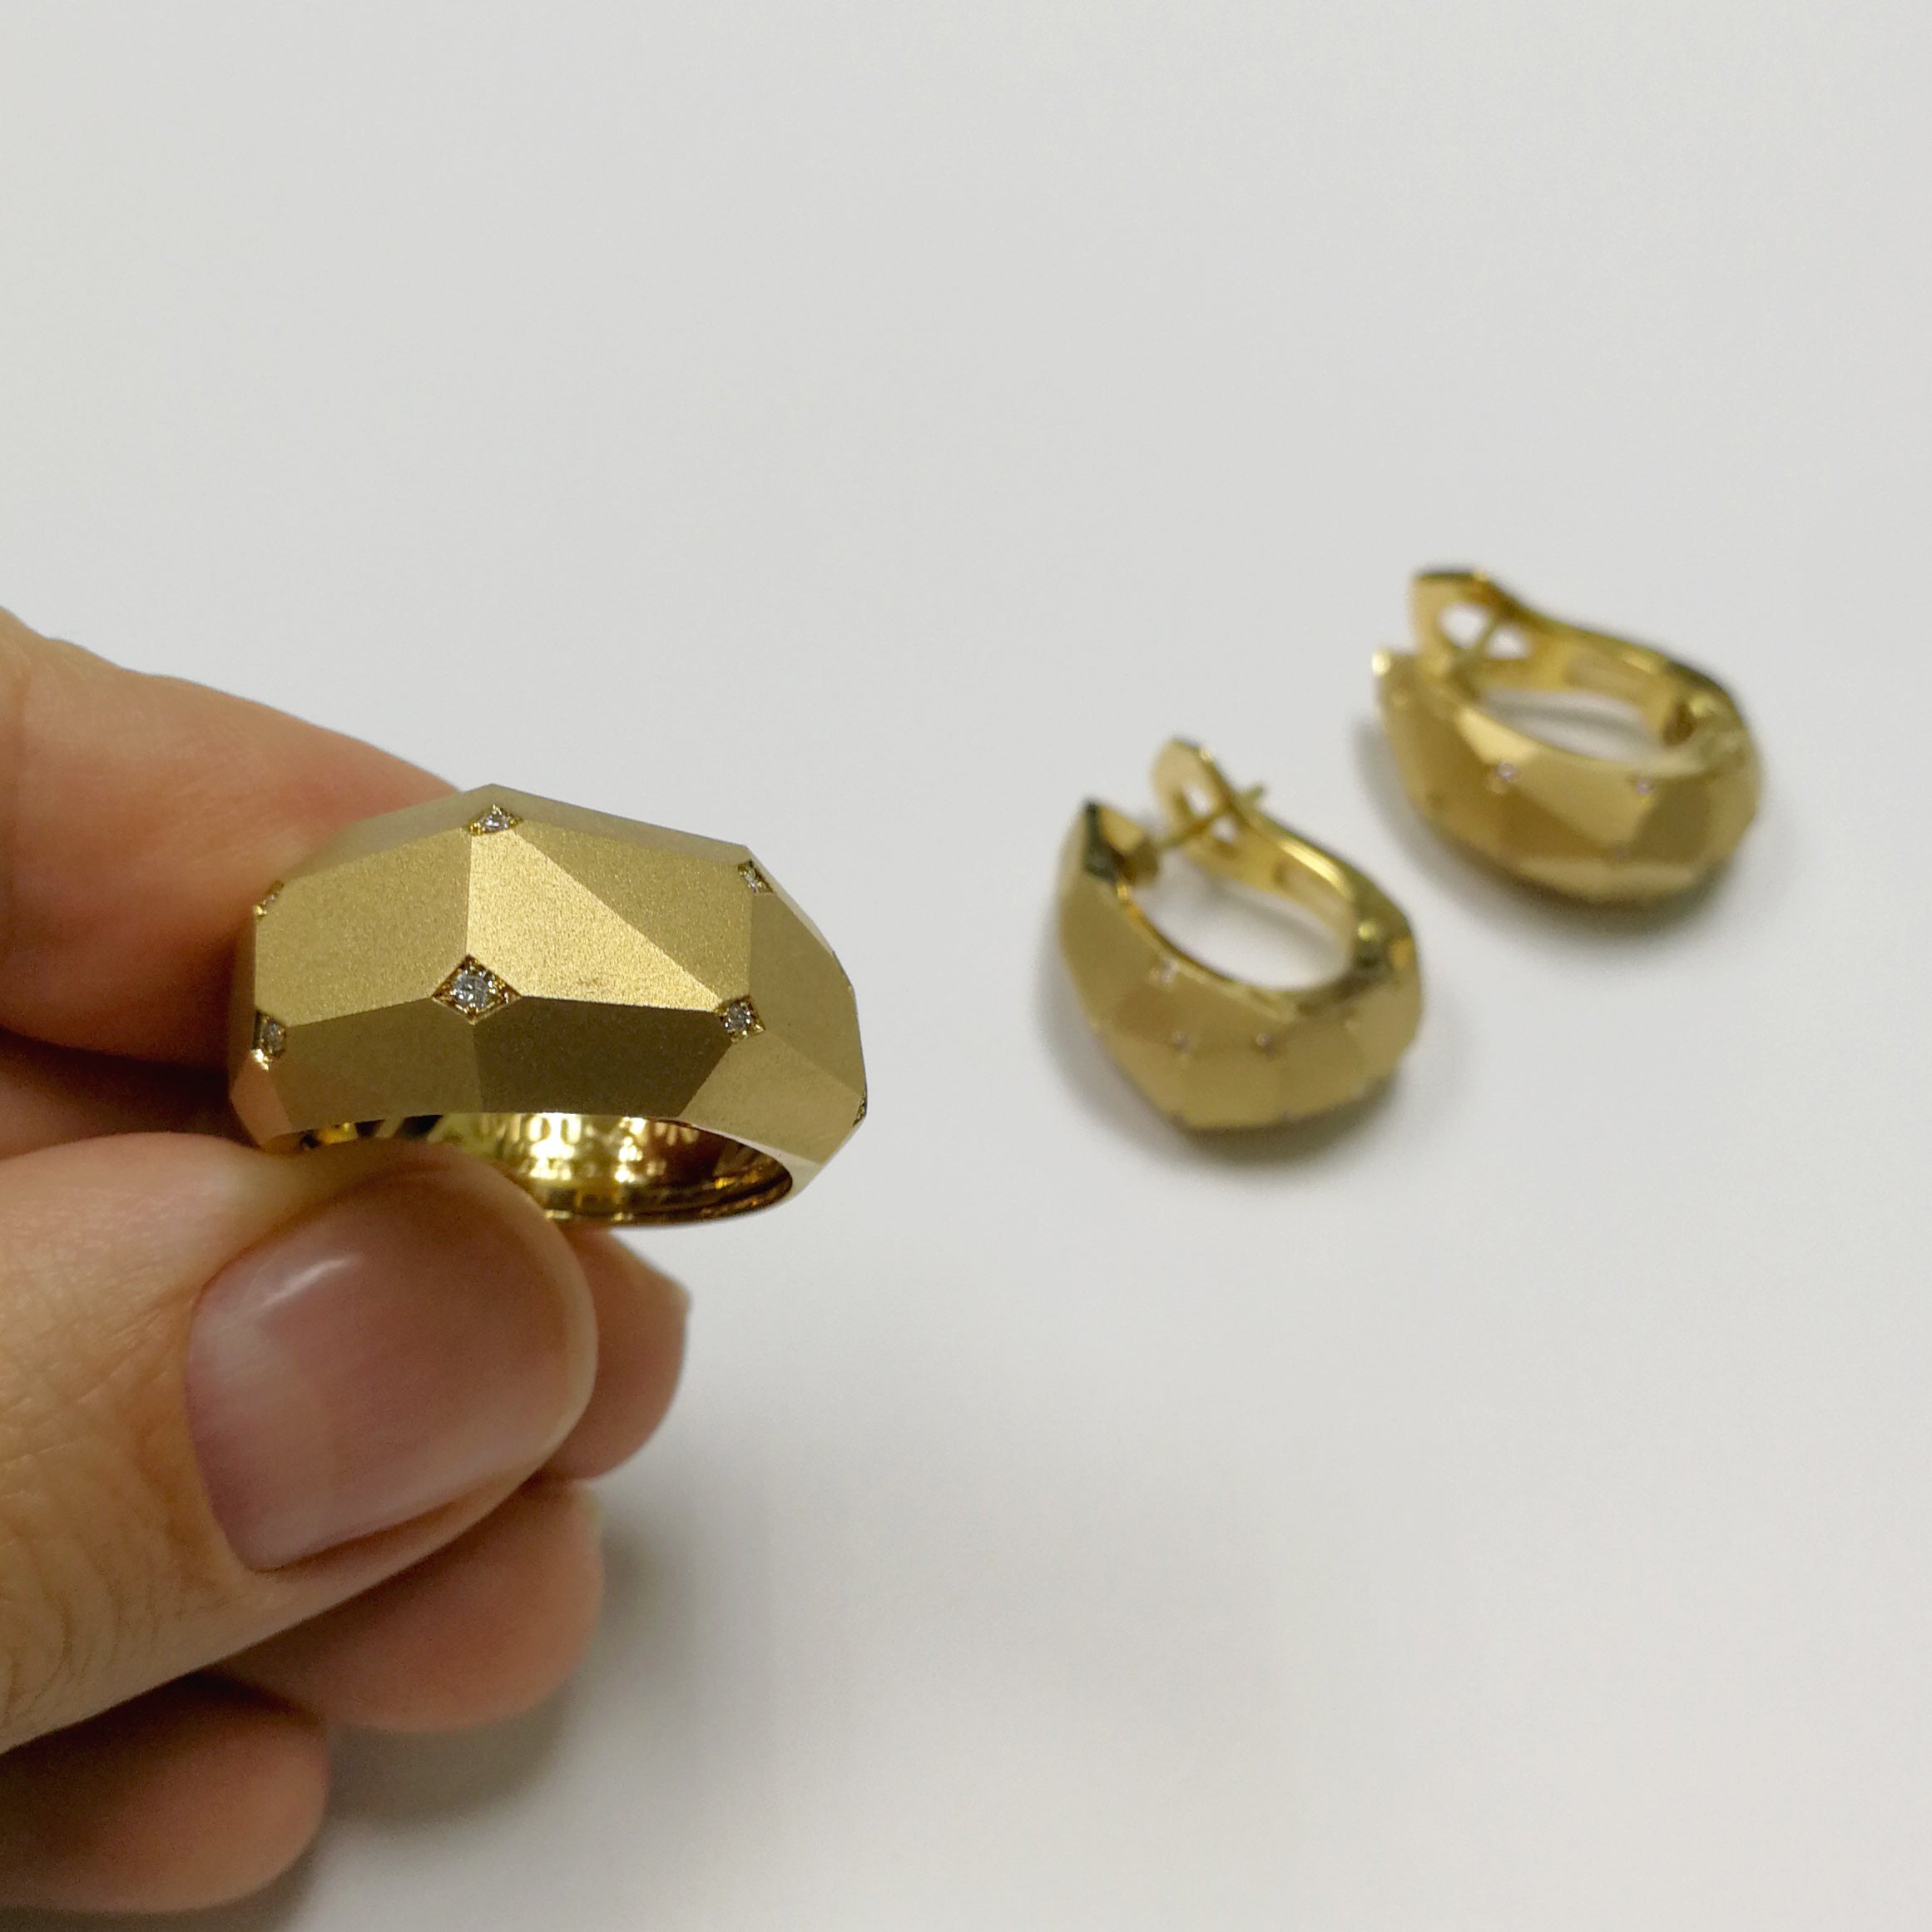 R 0190-5, 18K Yellow Gold, Diamonds Ring